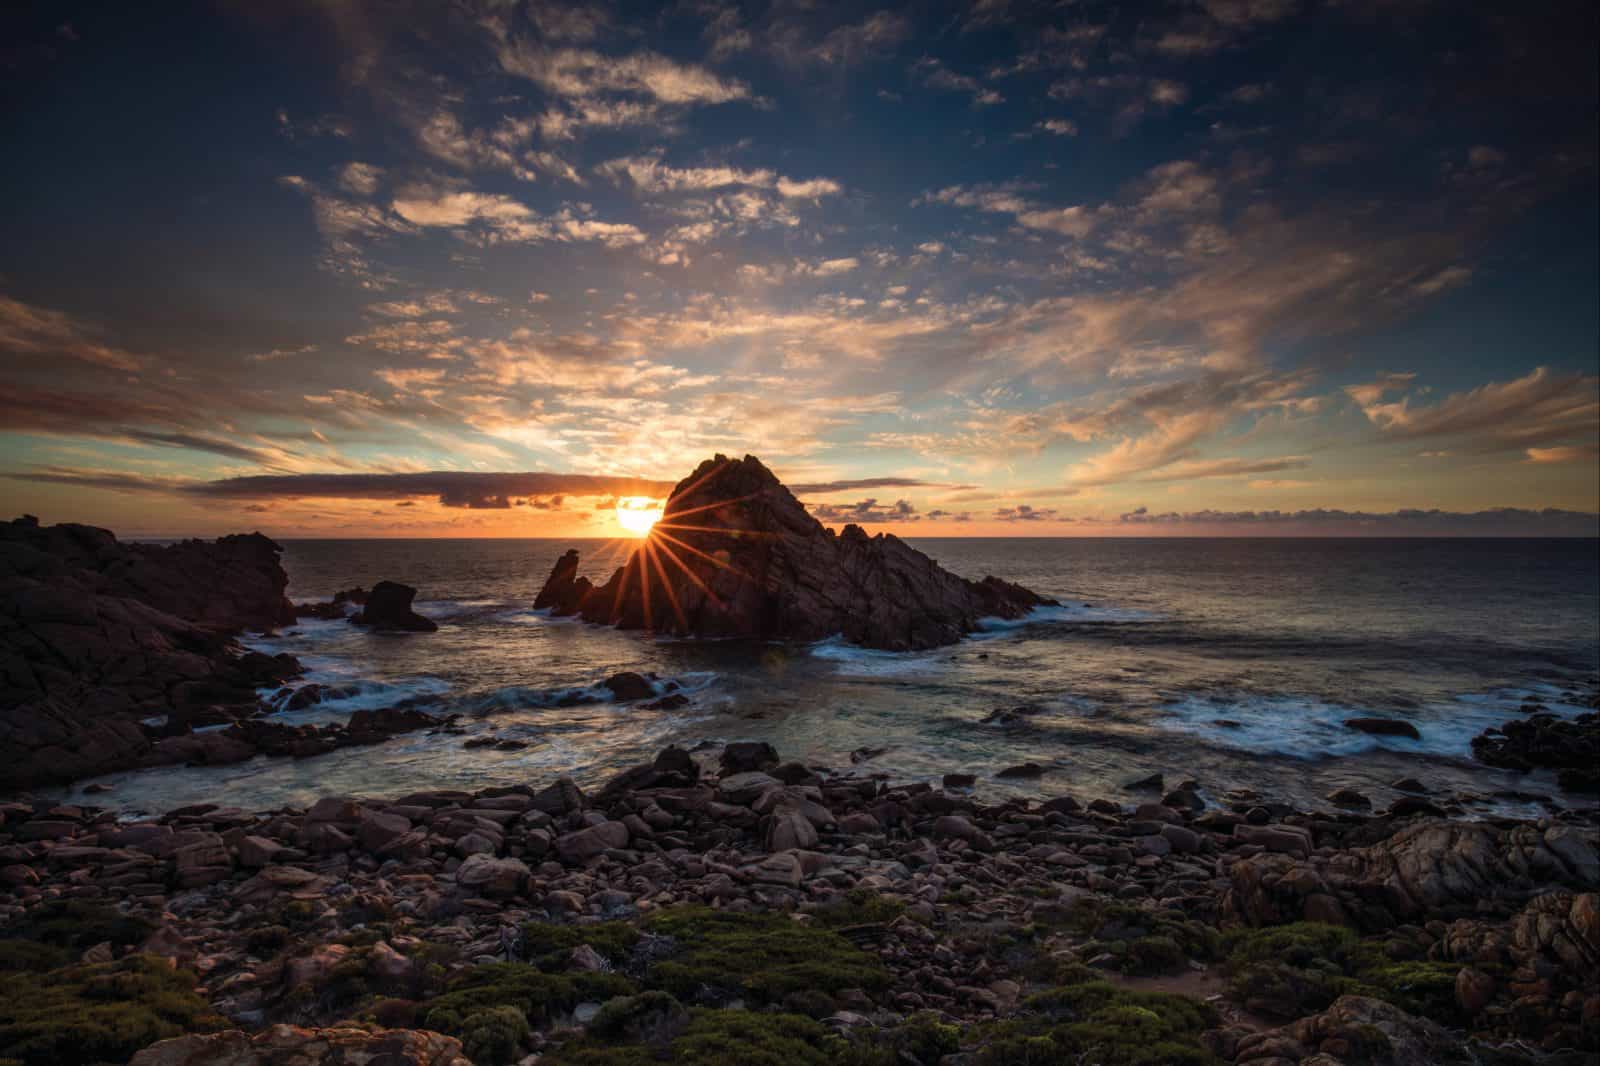 Sugarloaf Rock at sunset